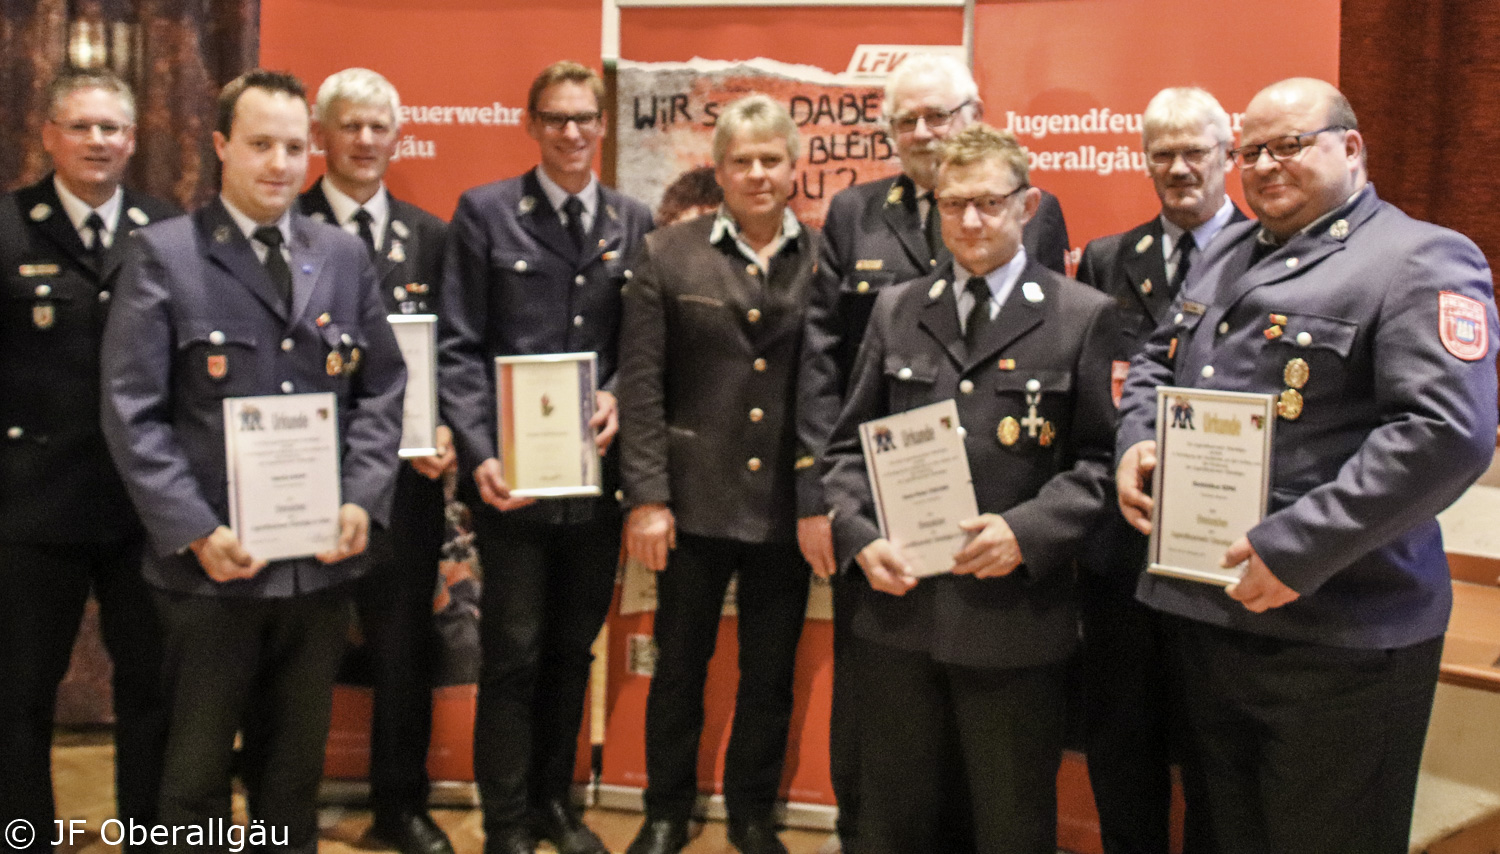 Hauptversammlung 2019 - Ehrung verdienter Feuerwehrkameraden